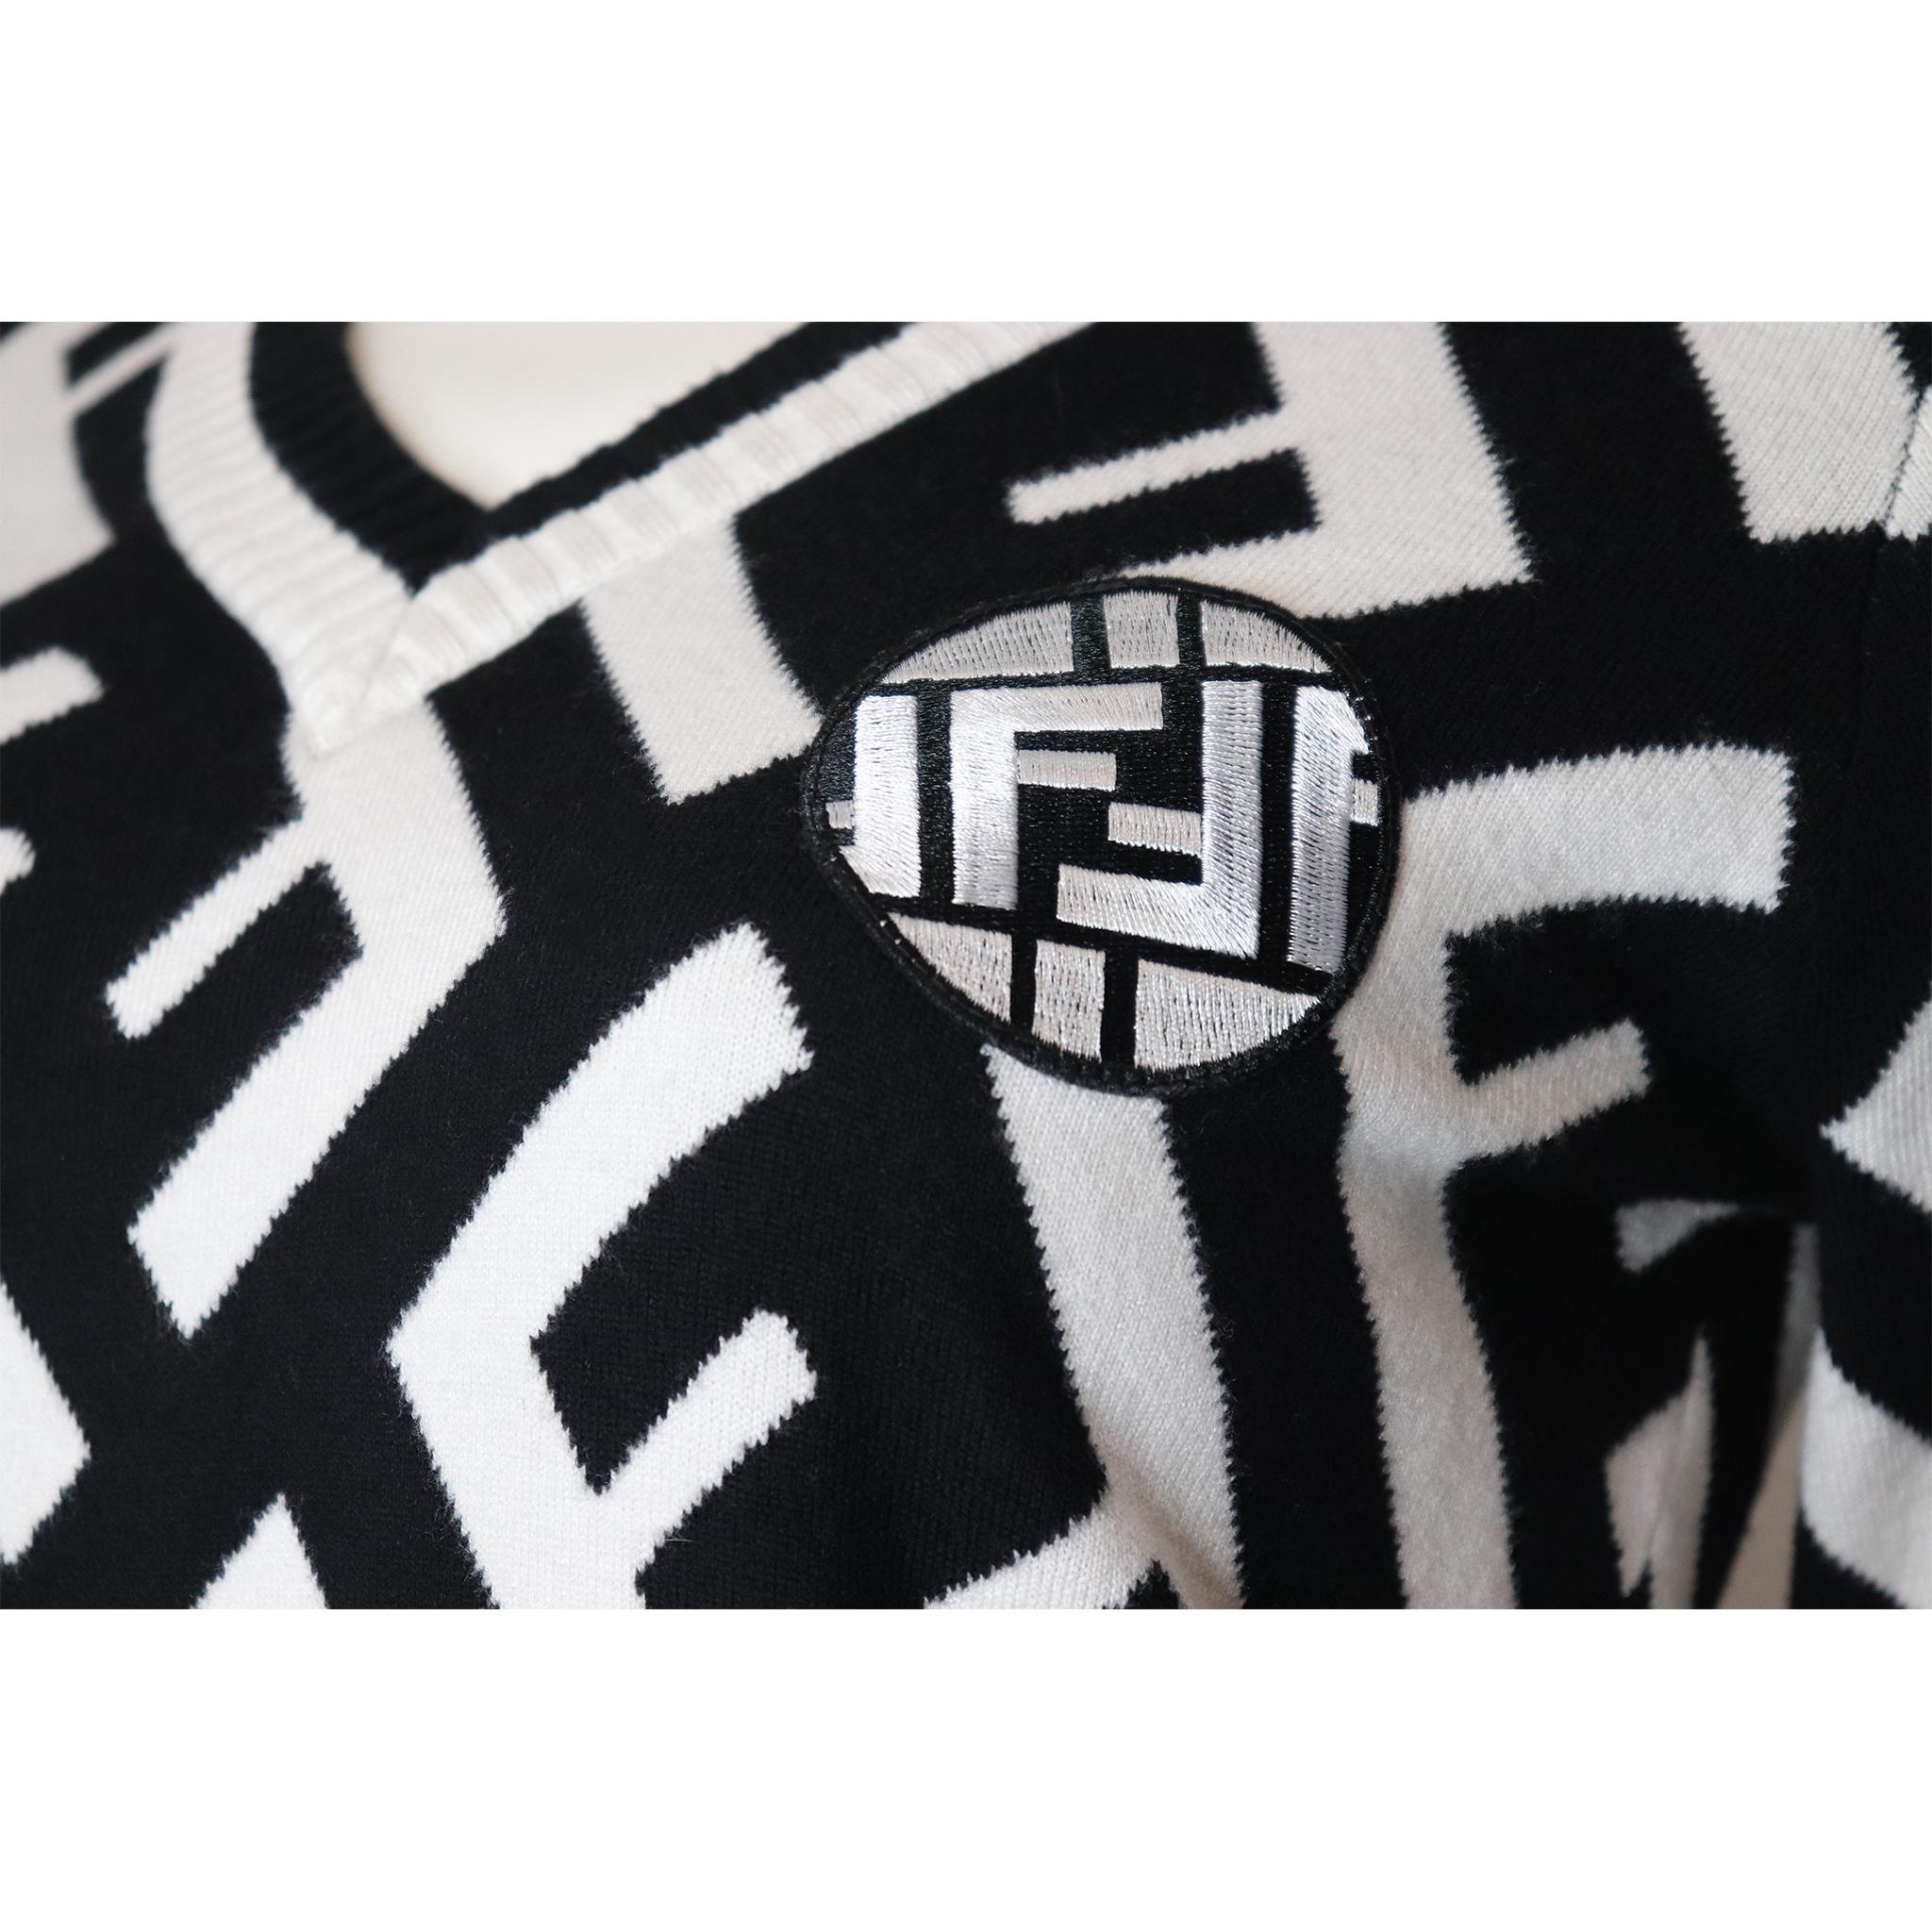 Fendi Black & White 'F' Pattern V-Neck Sweater. In excellent condition 

Measurements-

Size: L 
Bust: 35 Inches
Arm Length: 24 Inches
Sweater Length: 21 Inches 